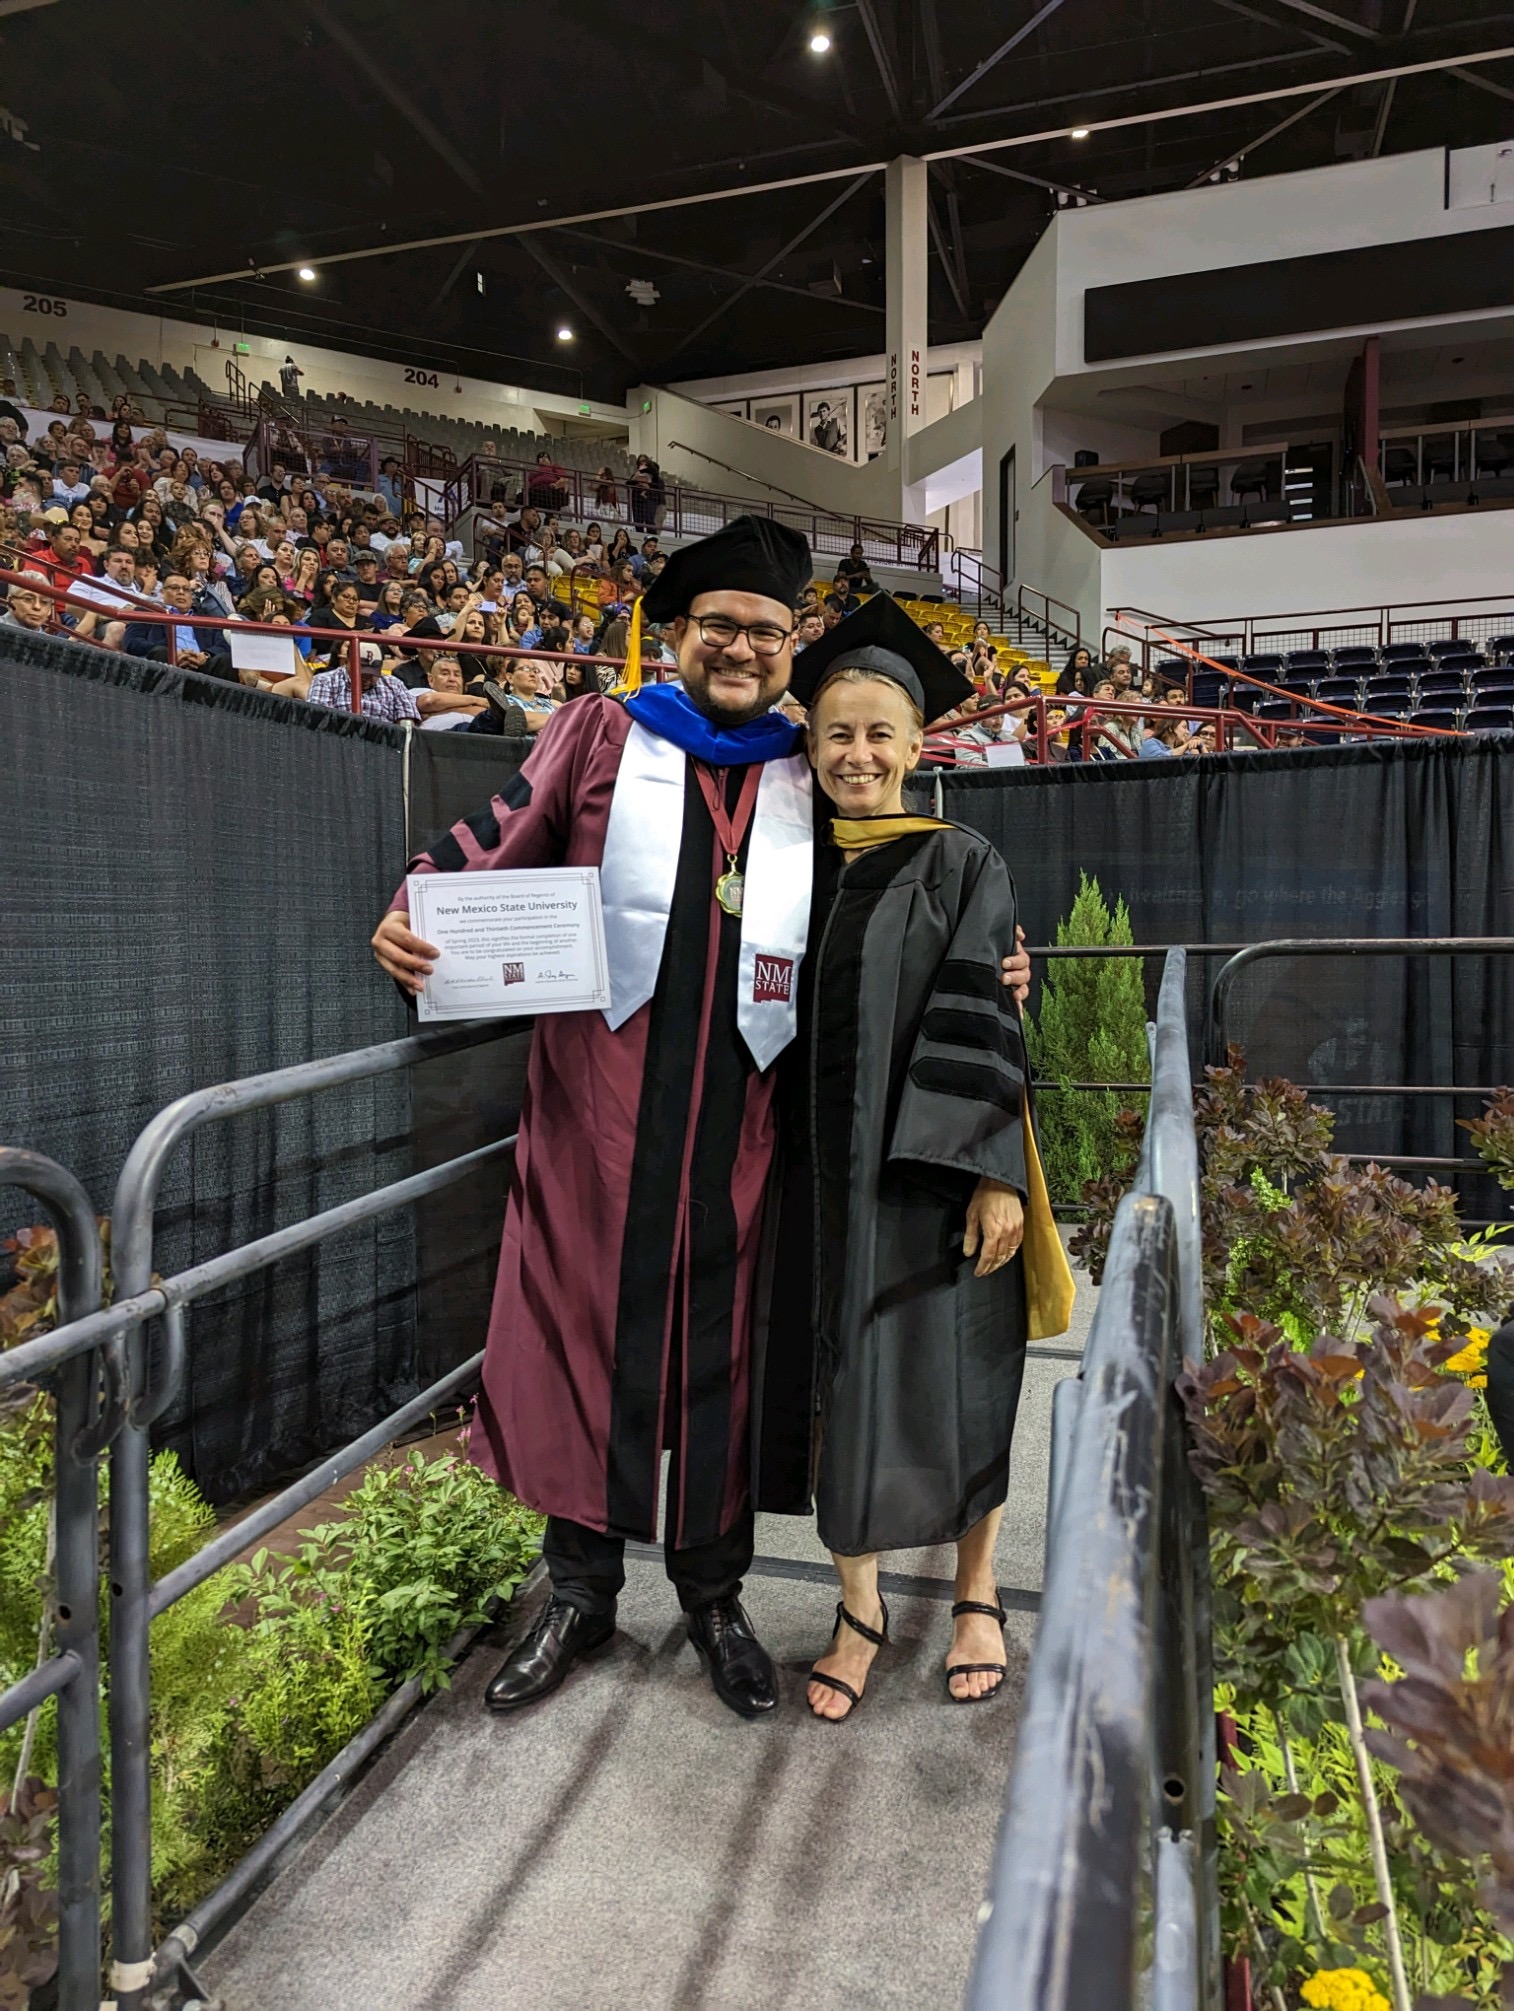 Dr. Eduardo Hernandez in his grad robes standing next to Dr. Kathy Hanley